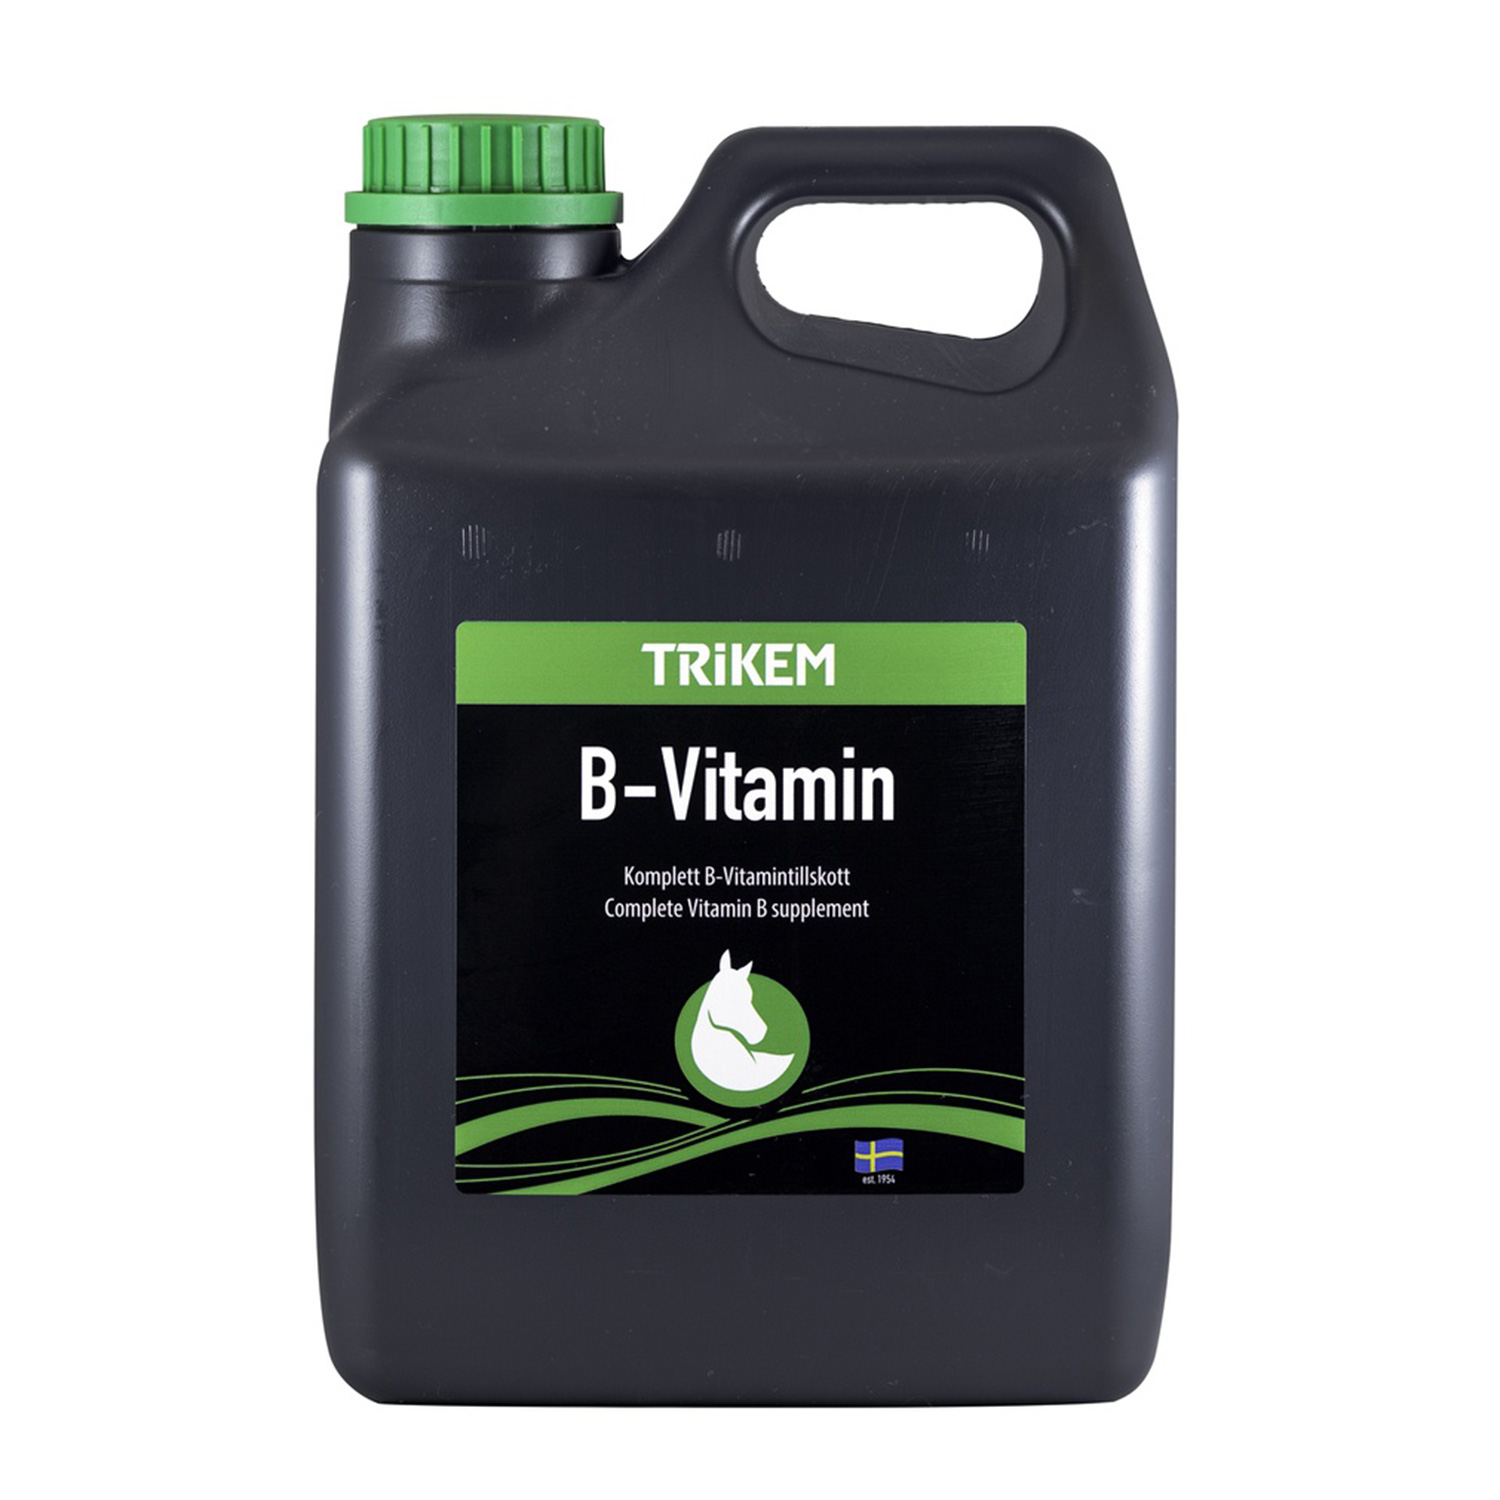 VIMITAL B-VITAMIN 1 liter